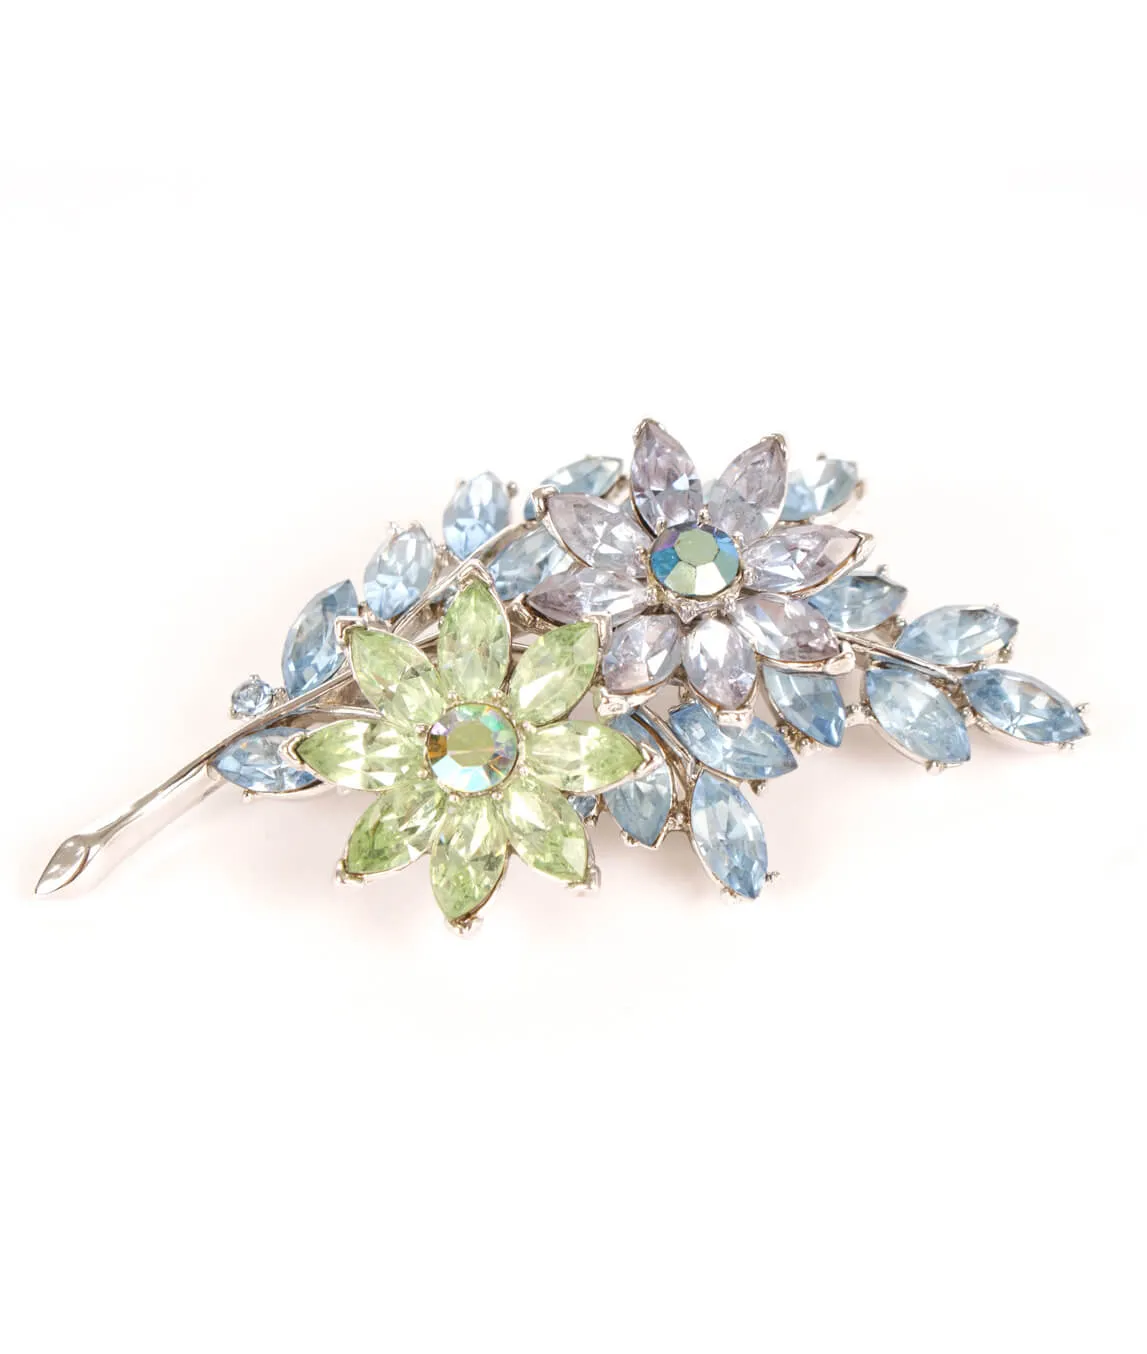 Vintage 1950s Trifari pastel crystal brooch pin